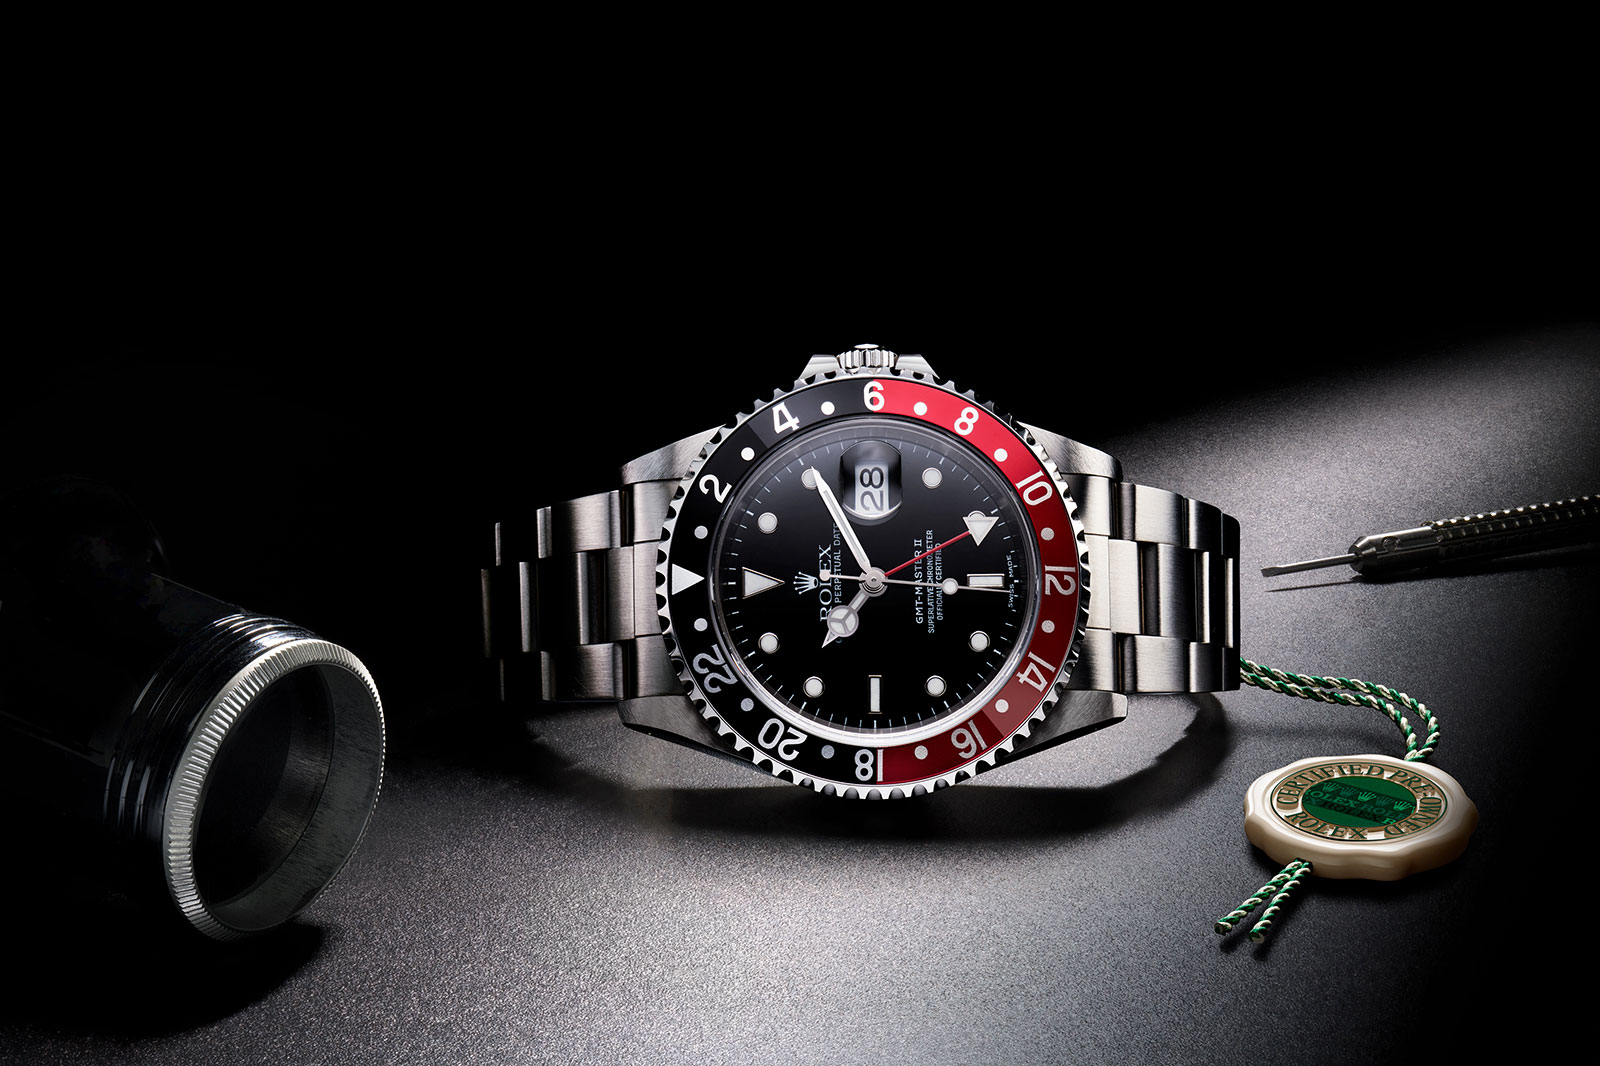 Preowned Premium & Luxury Swiss Watches Sale in Dubai